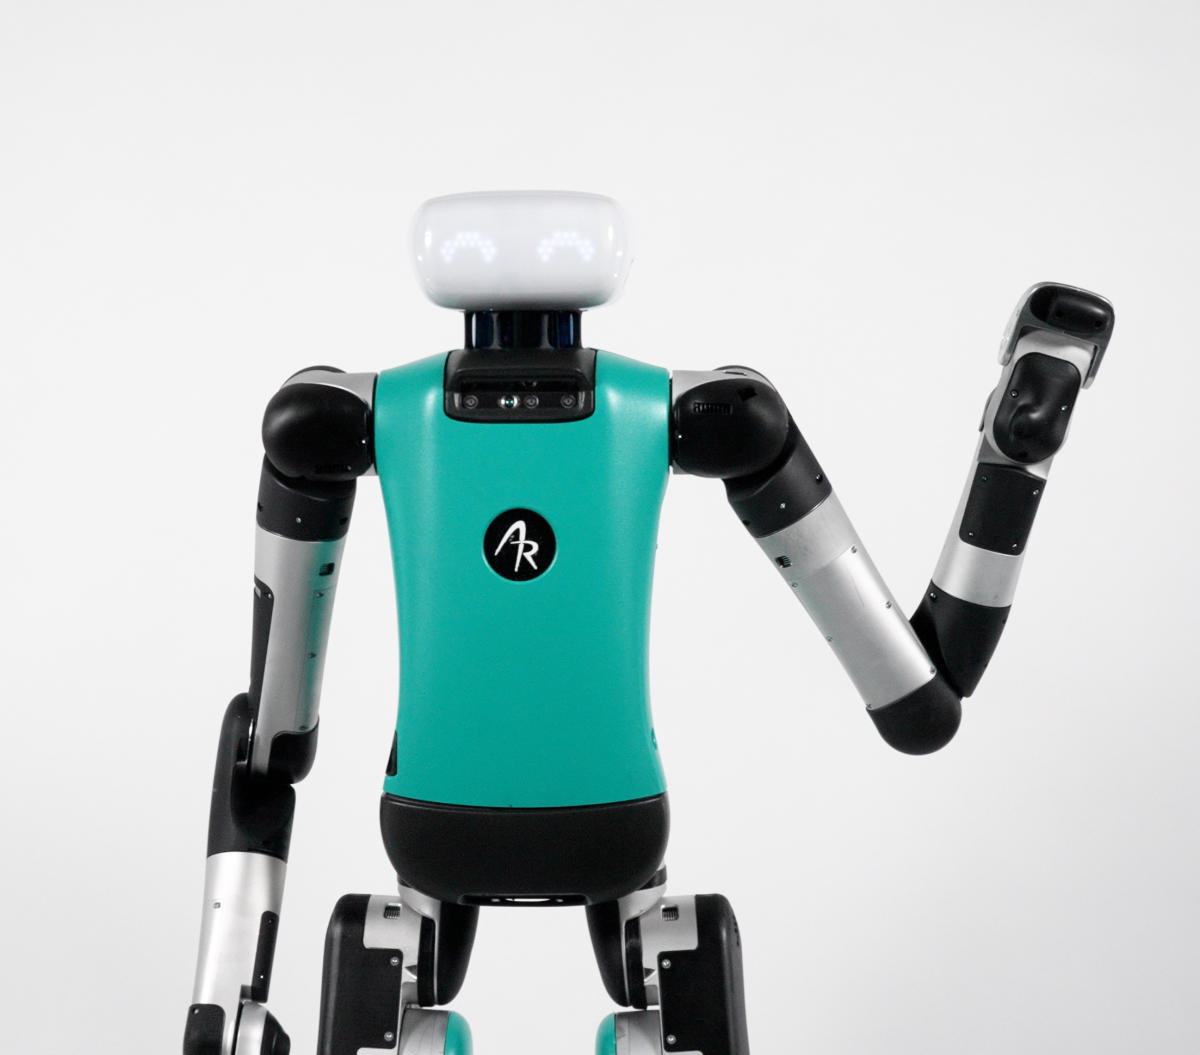 Meet the new face of Agility Robotics’ Digit - Image